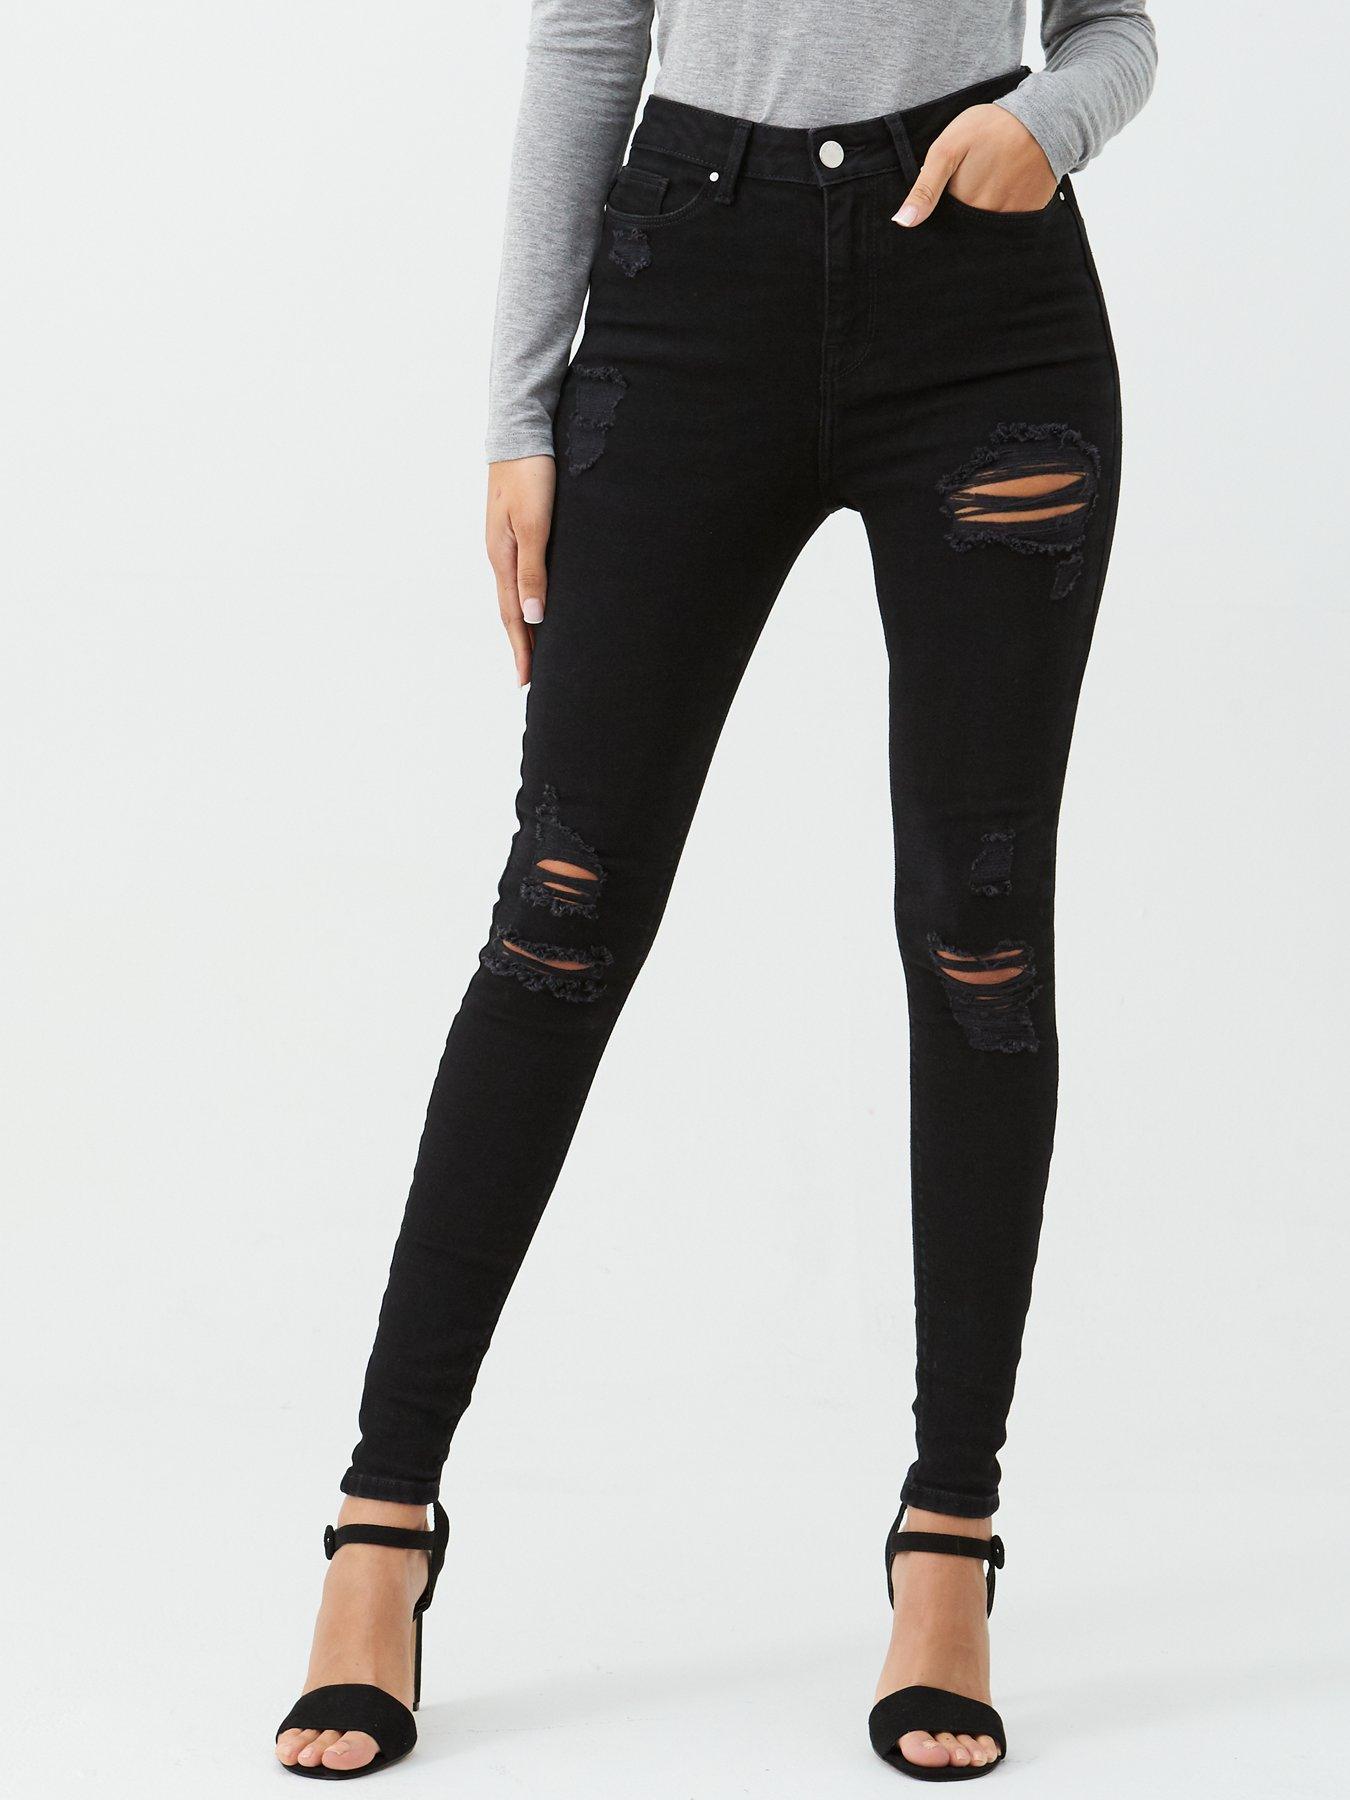 black ripped skinny jeans womens